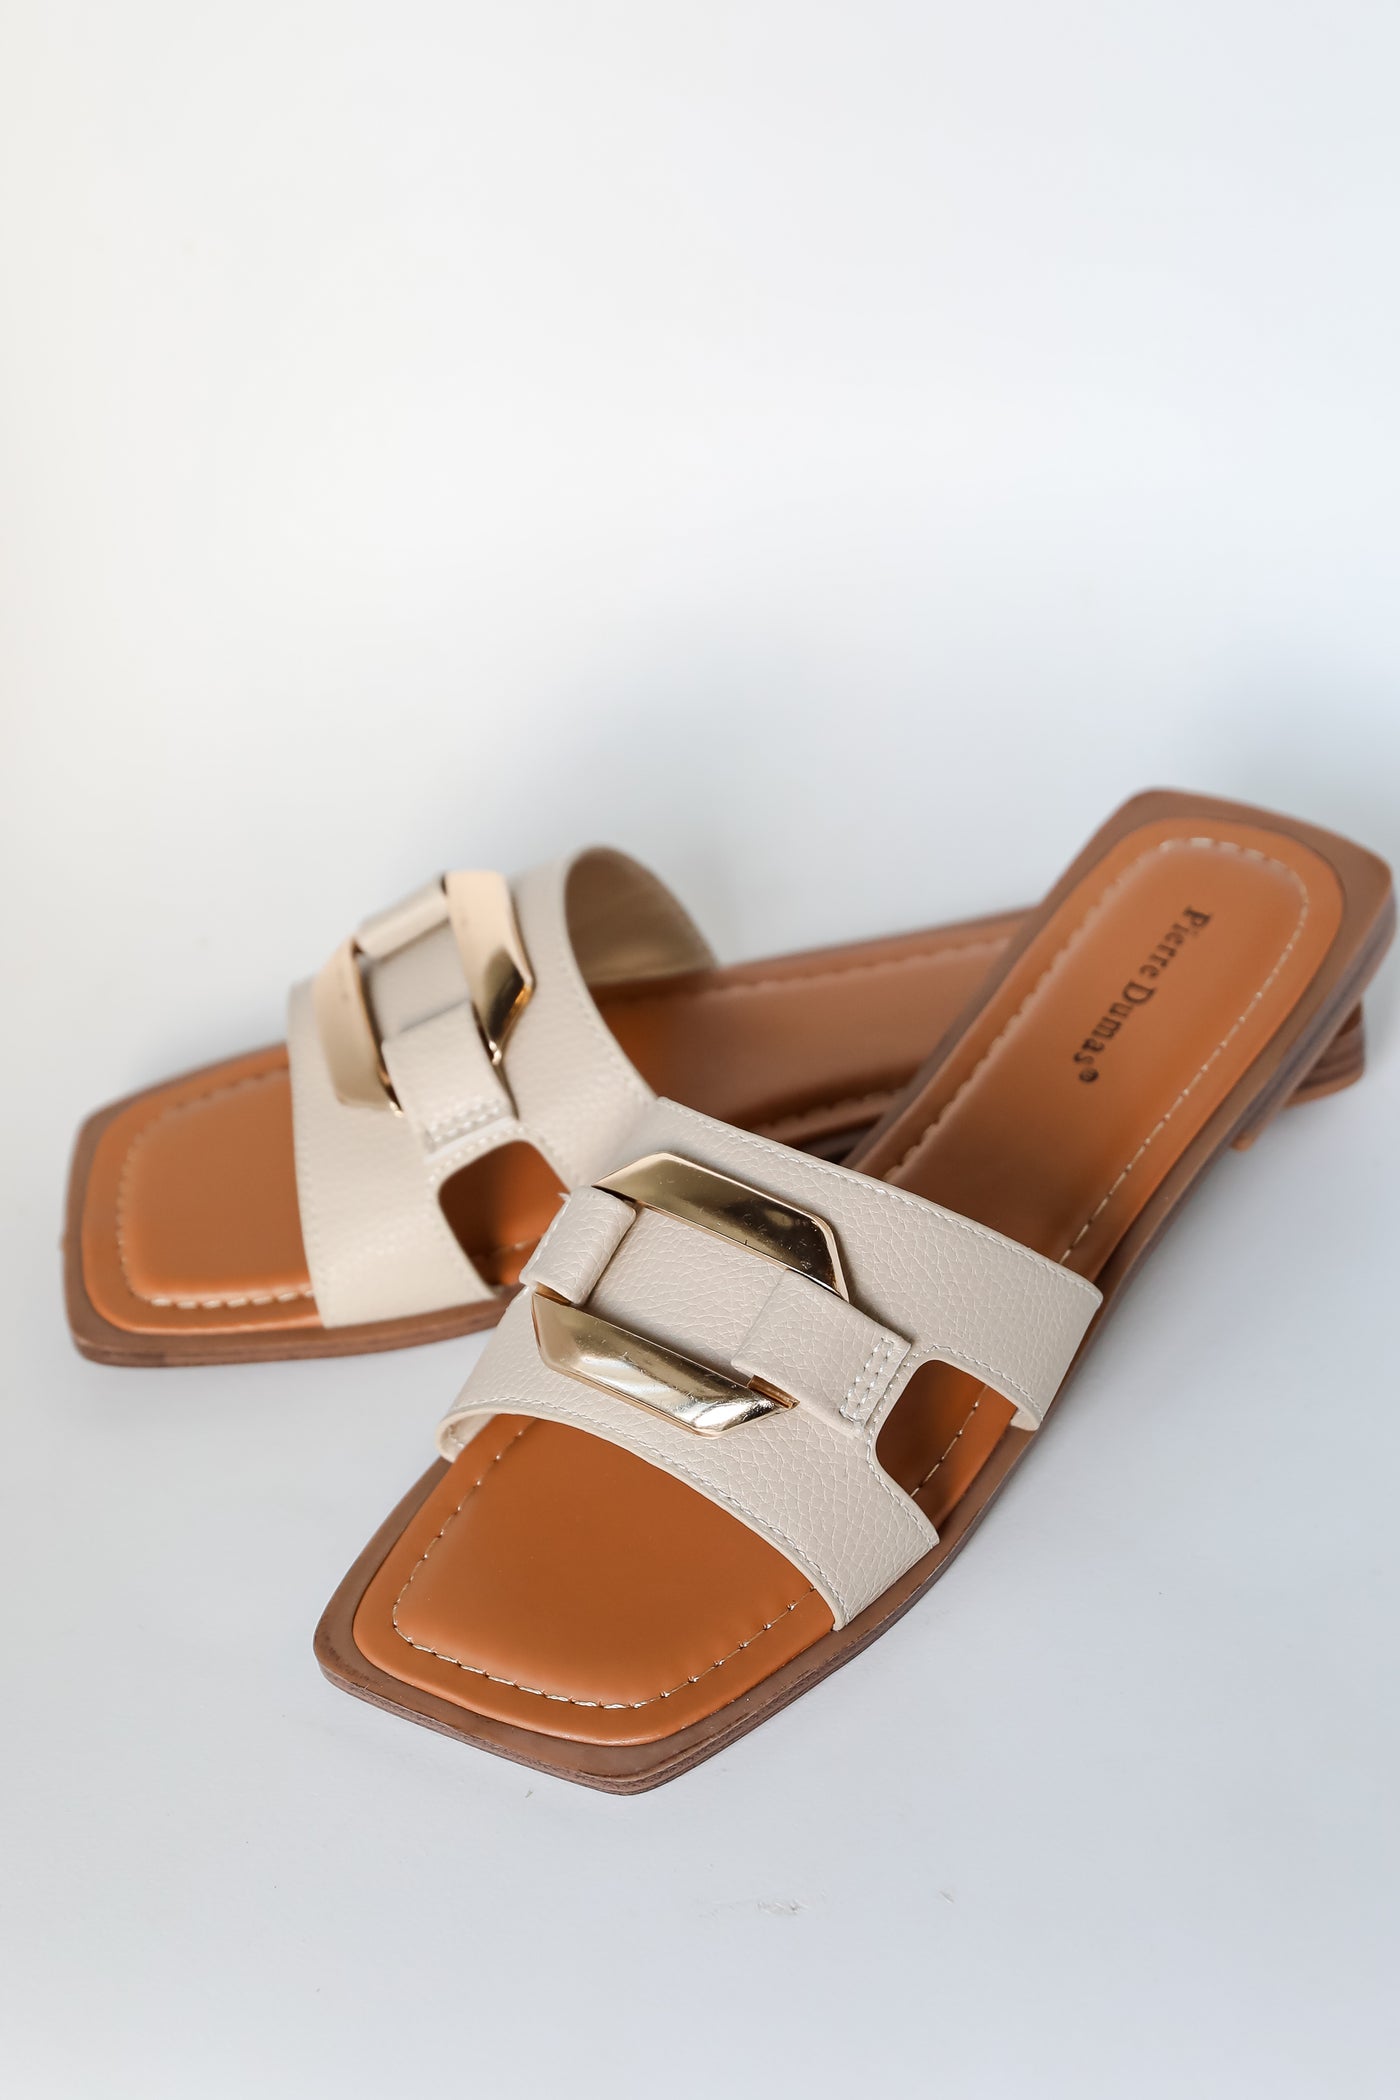 flat slide sandals